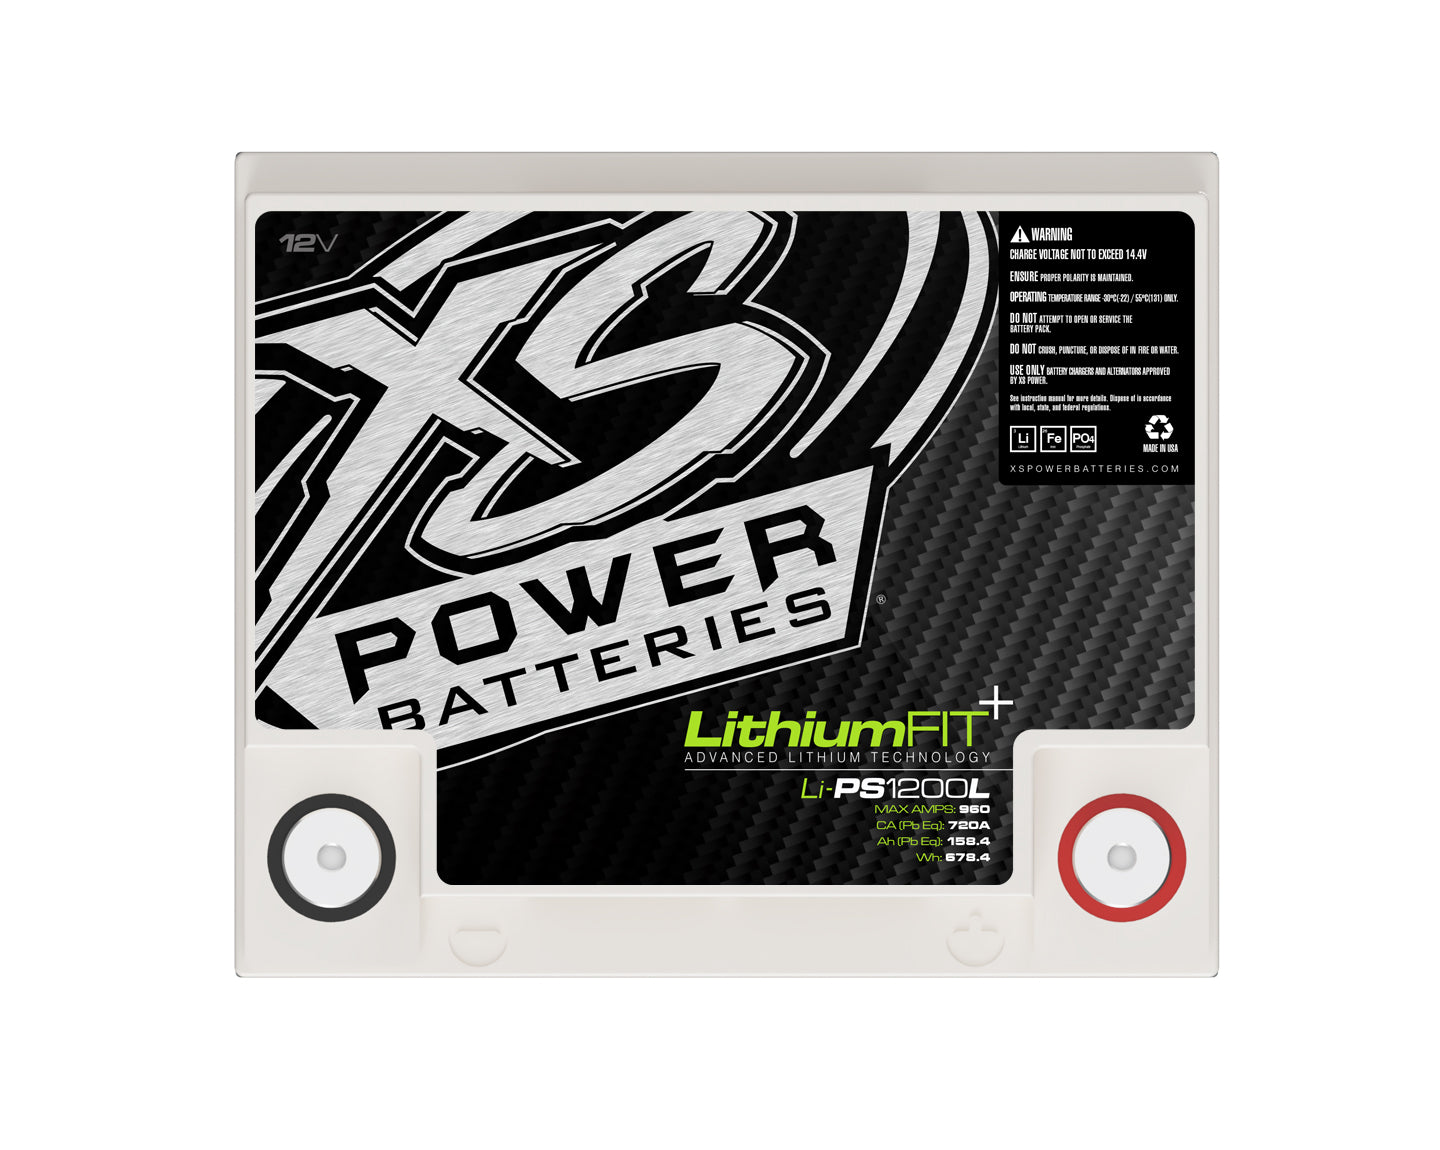 Li-PS1200L XS Power 12VDC Lithium Powersports Vehicle Battery 960A 52.8Ah